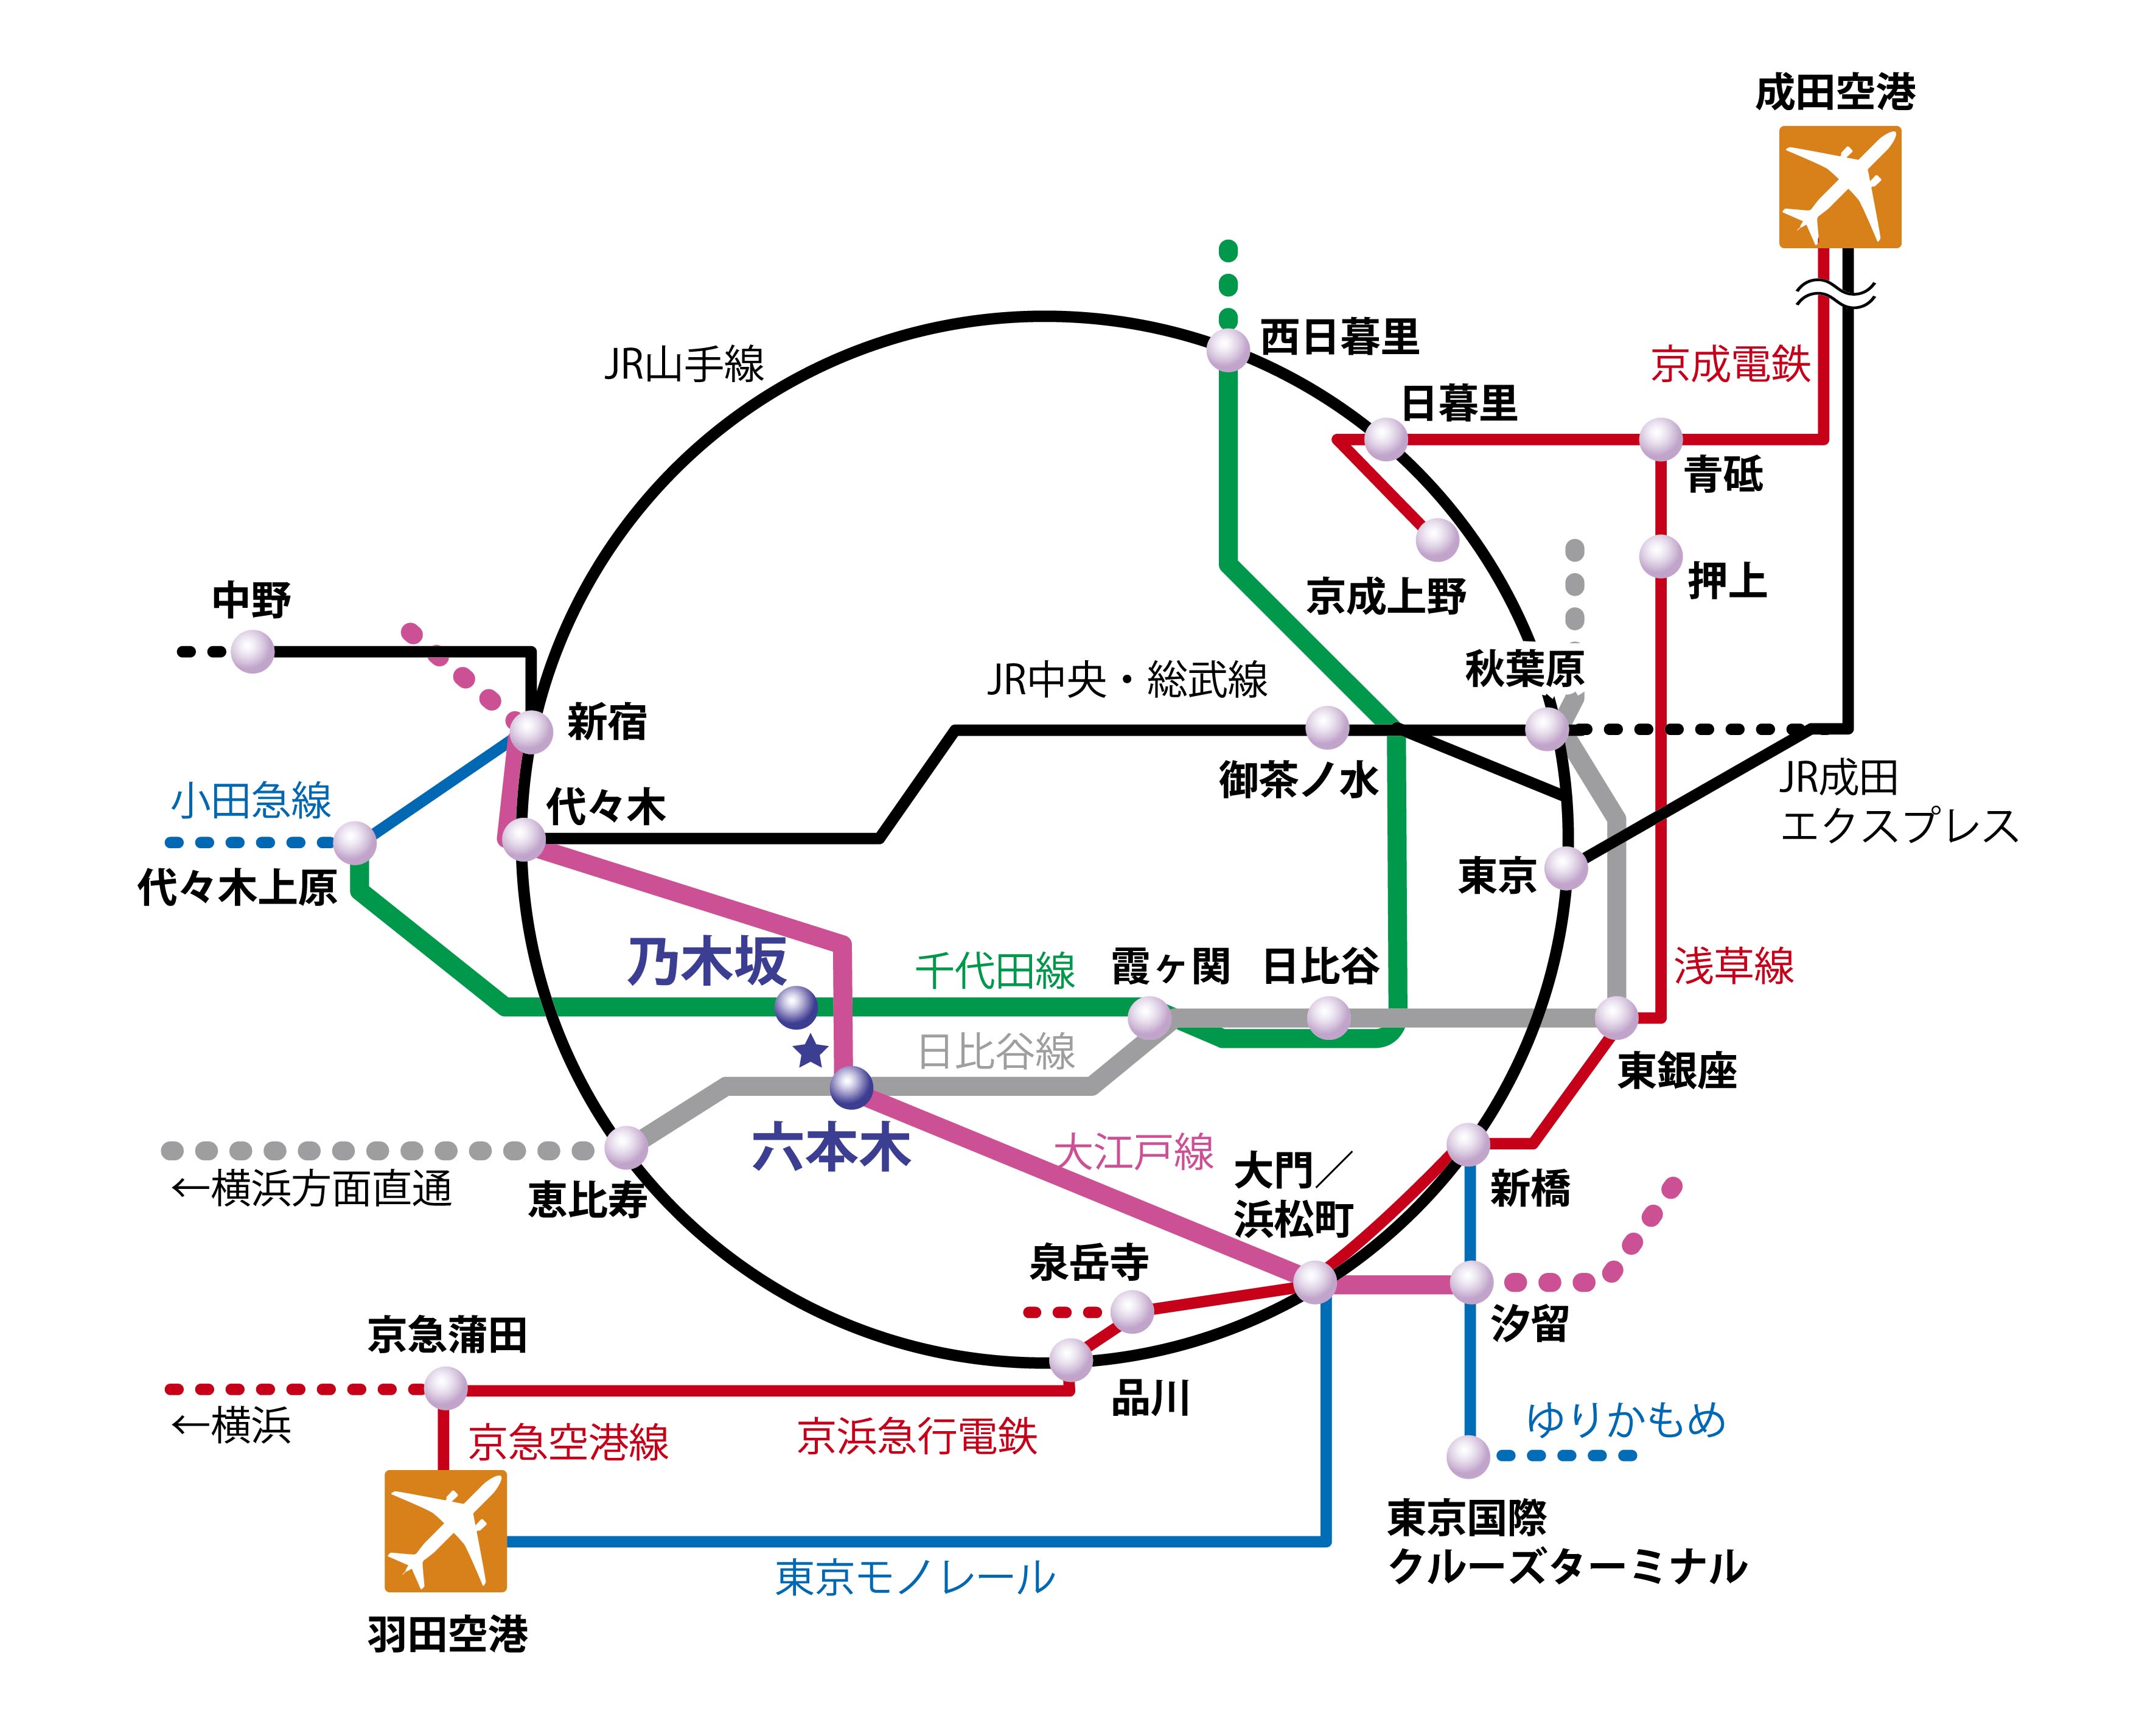 Train-jp_2019_190616cs4